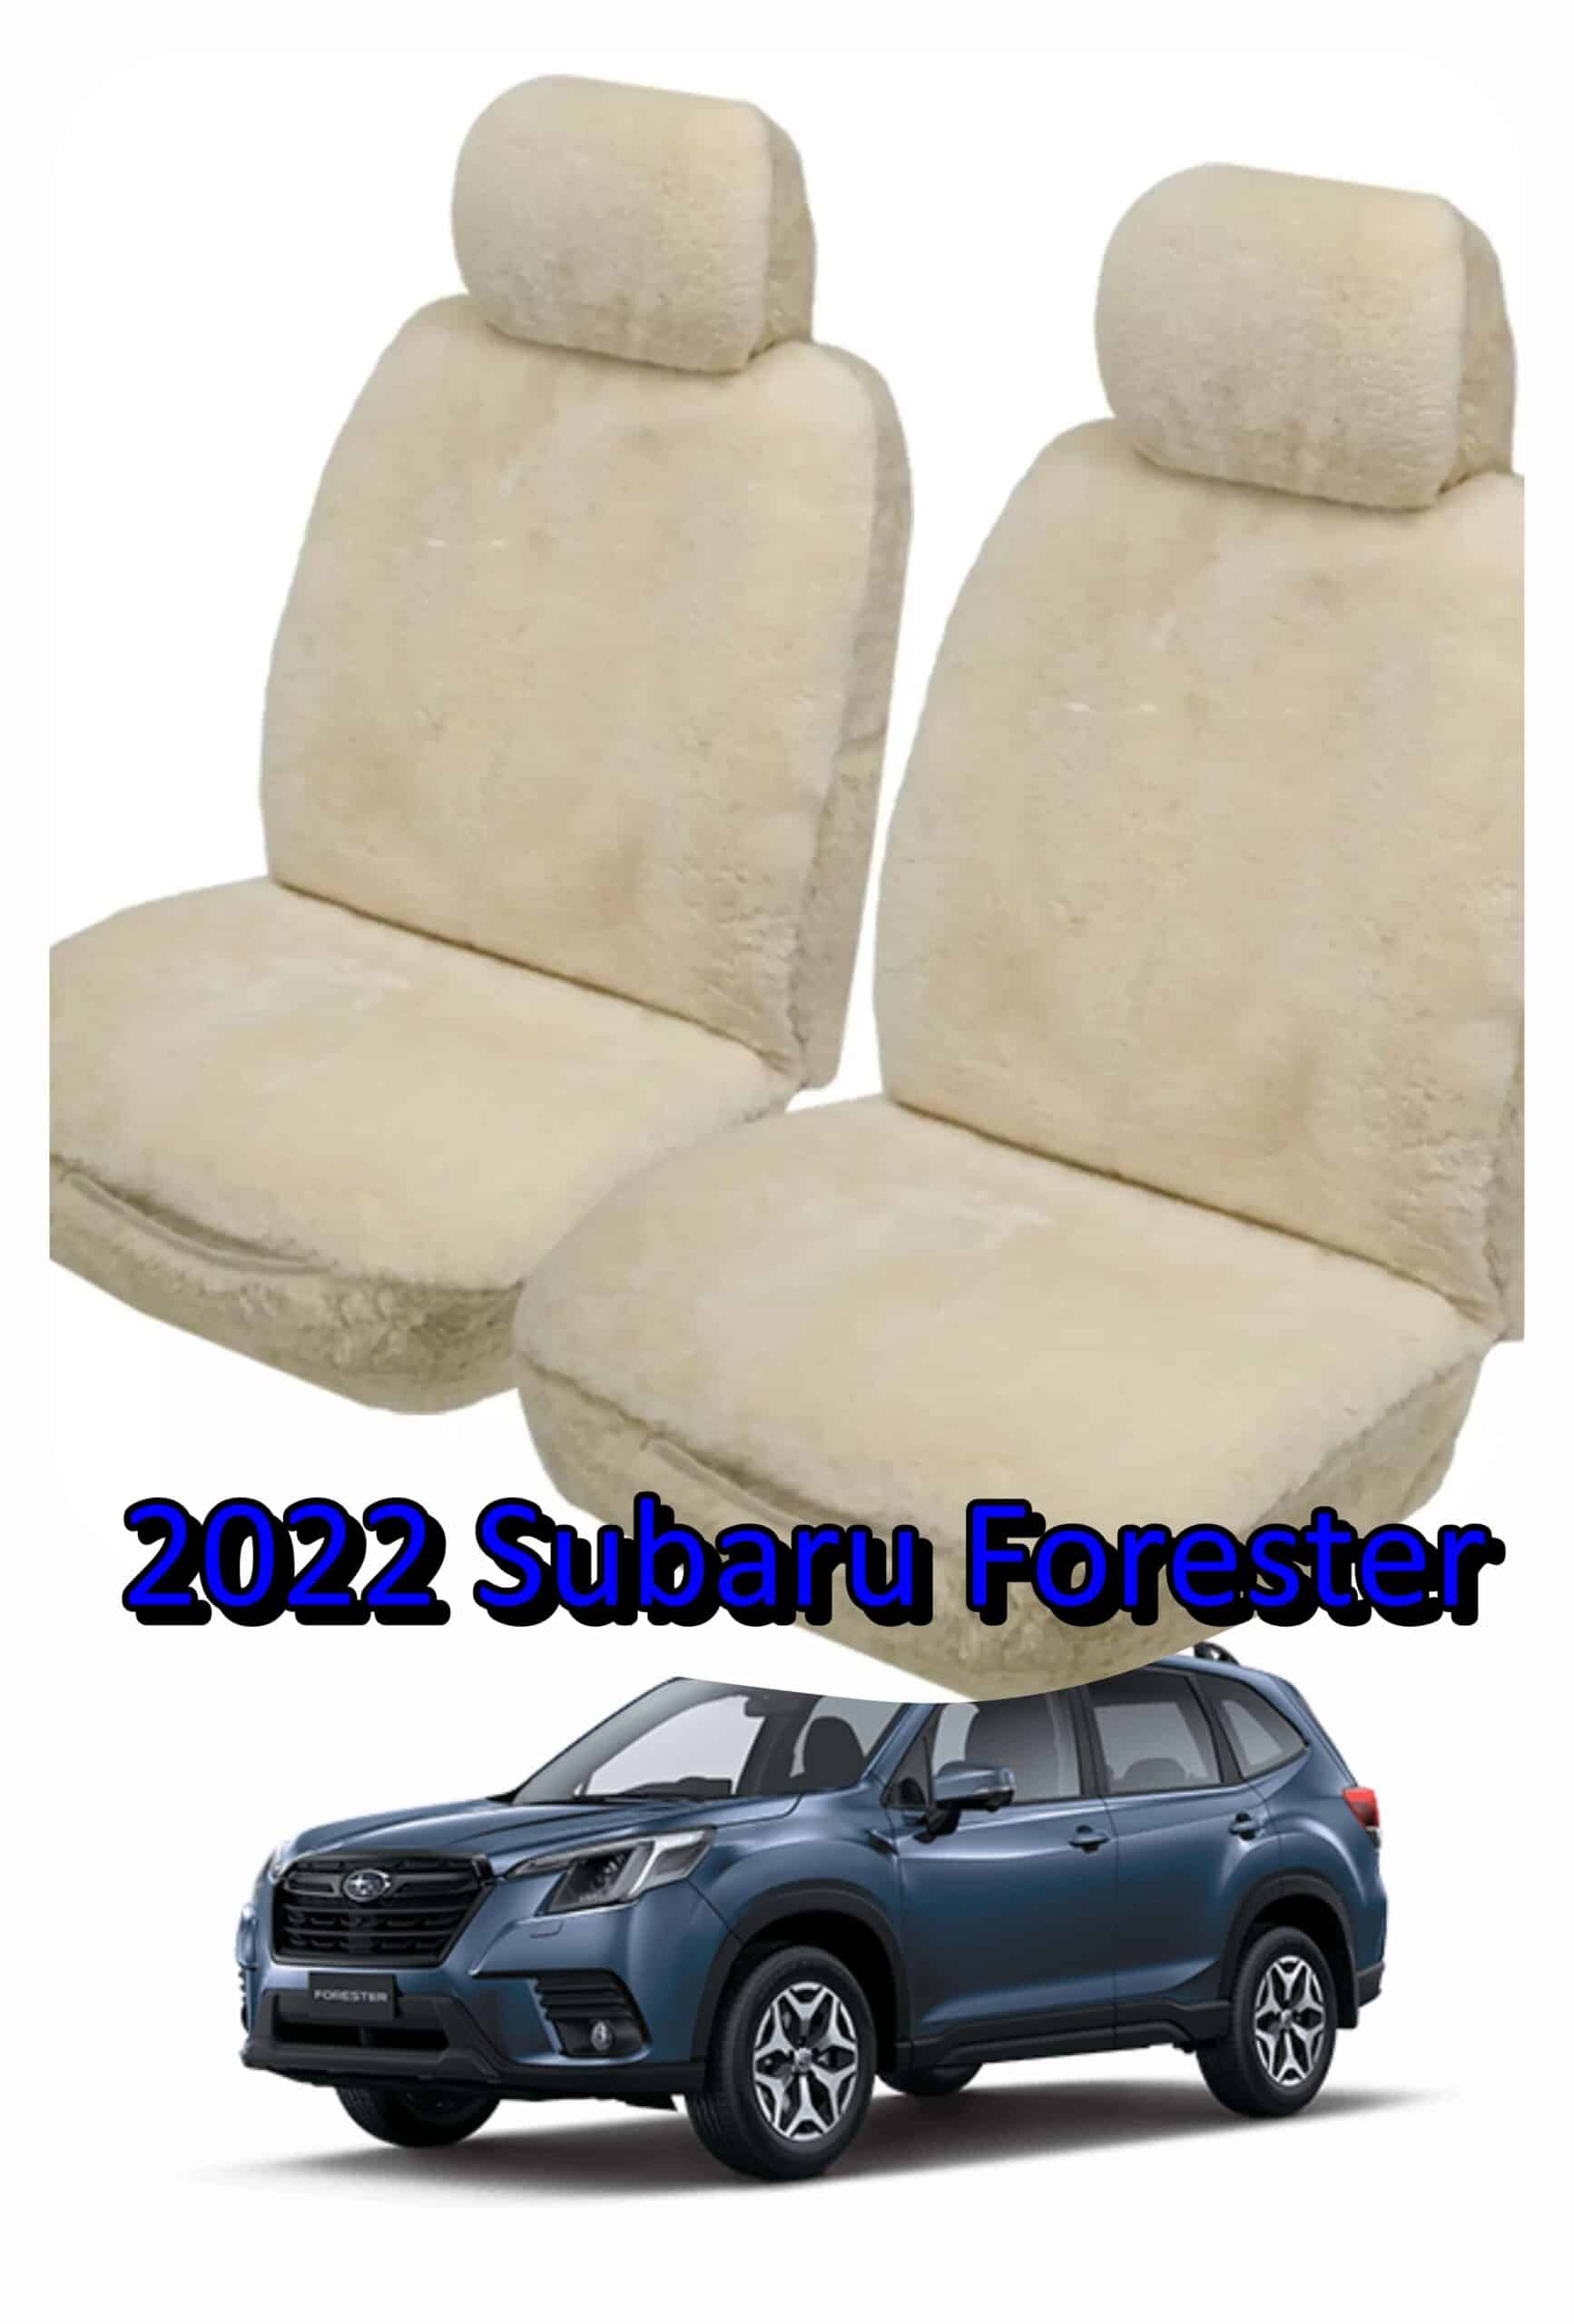 Subaru Forester Sheepskin Car seat cover - Forester Sheepskin seat cover - Forester Car seat cover